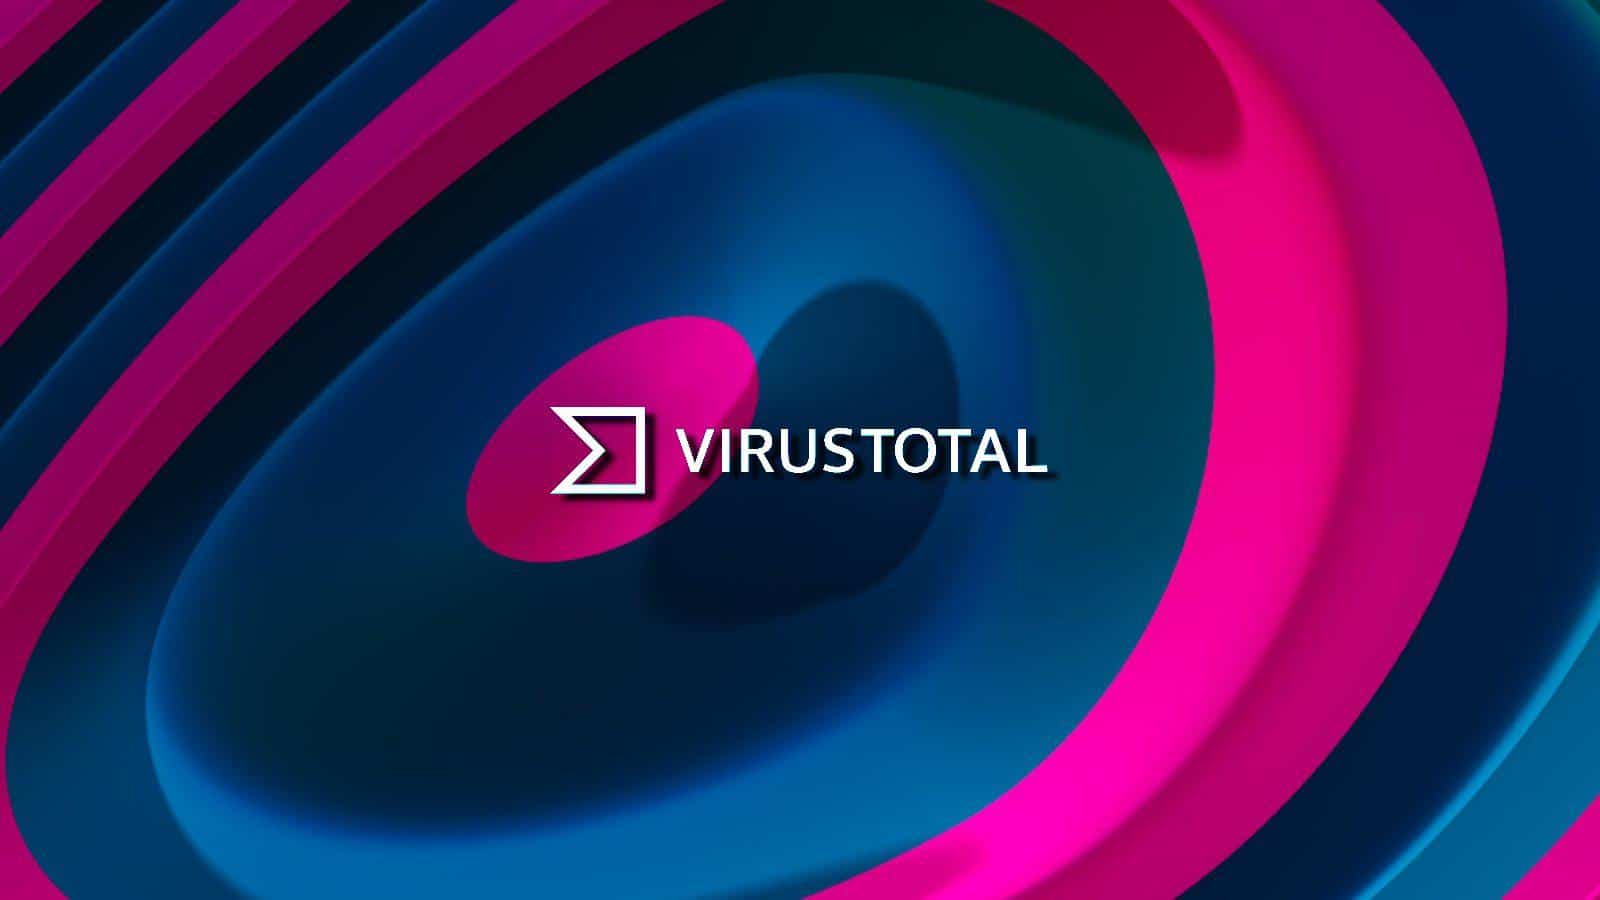 VirusTotal now has an AI-powered malware analysis feature